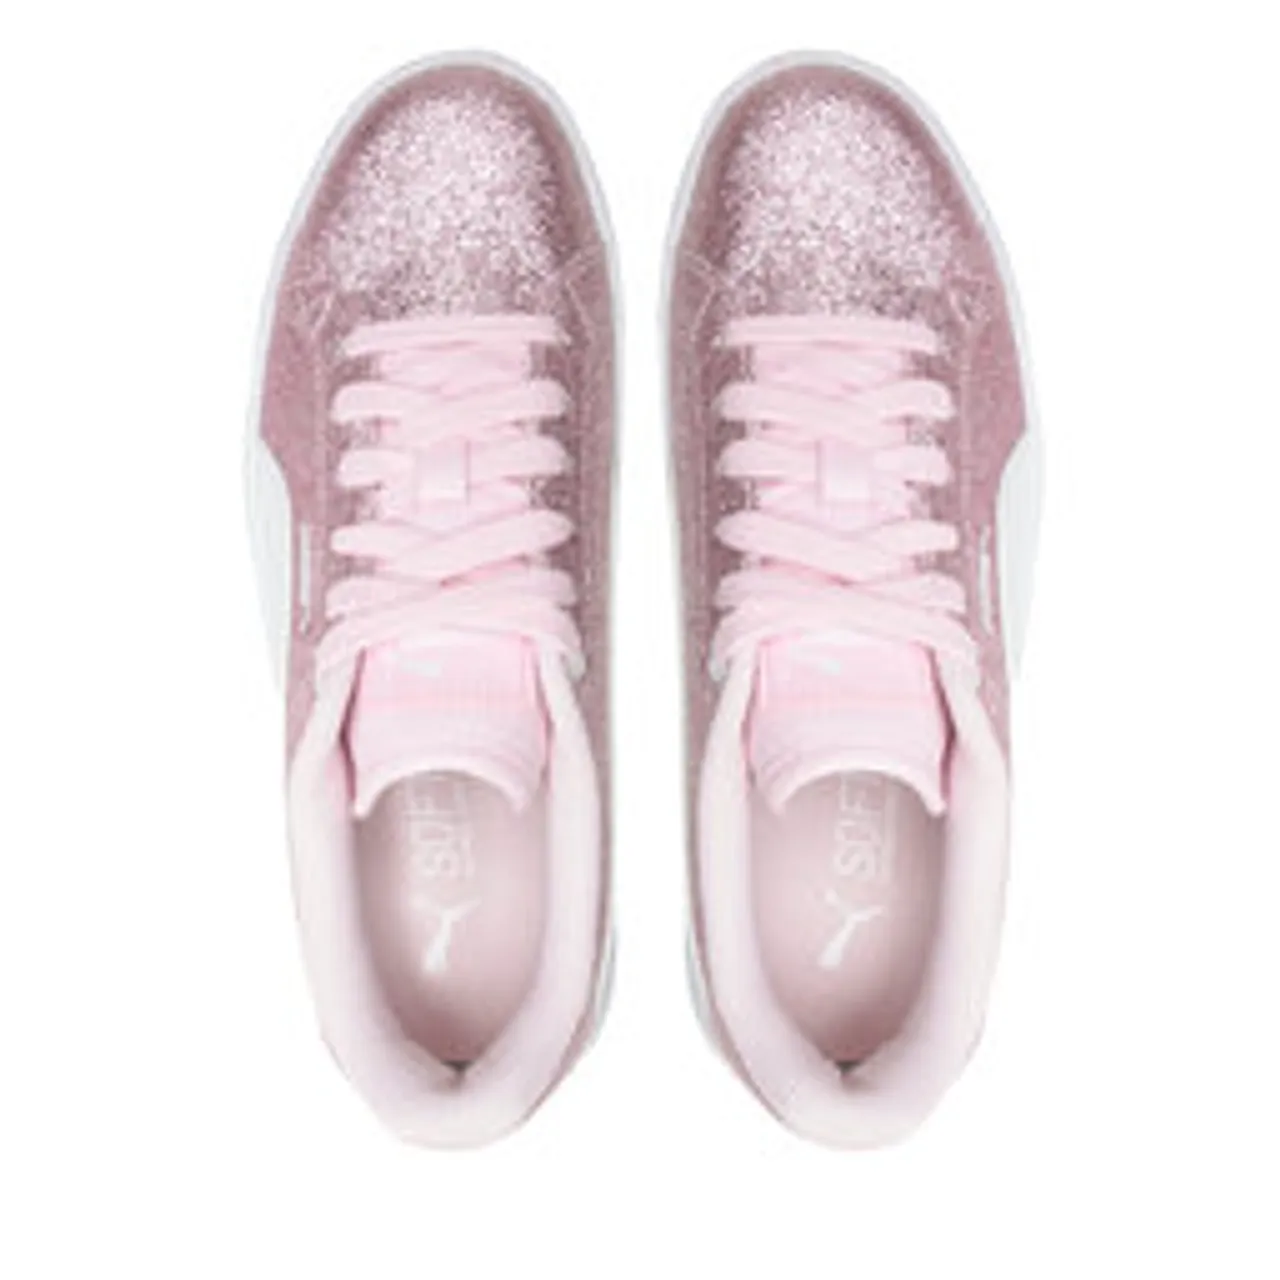 Puma Sneakers Karmen Glitz Jr 388453 03 Pearl Pink/ White - Preise  vergleichen